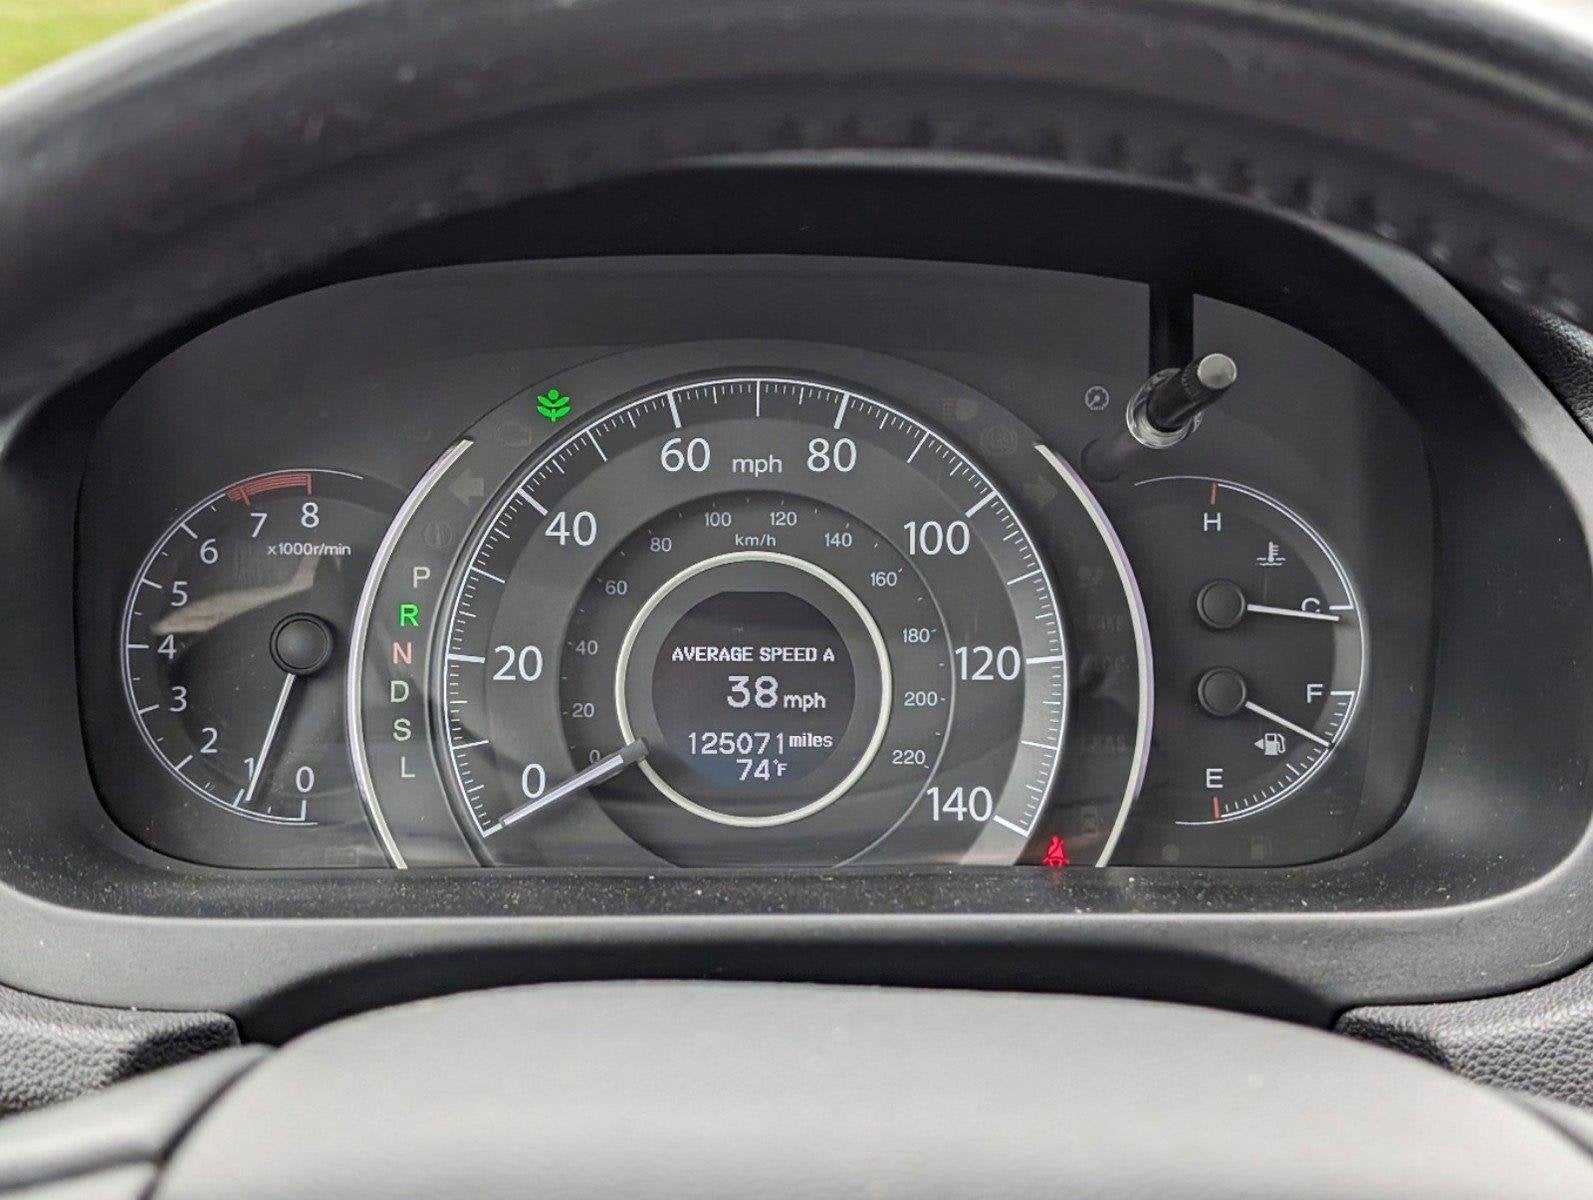 2016 Honda CR-V Touring